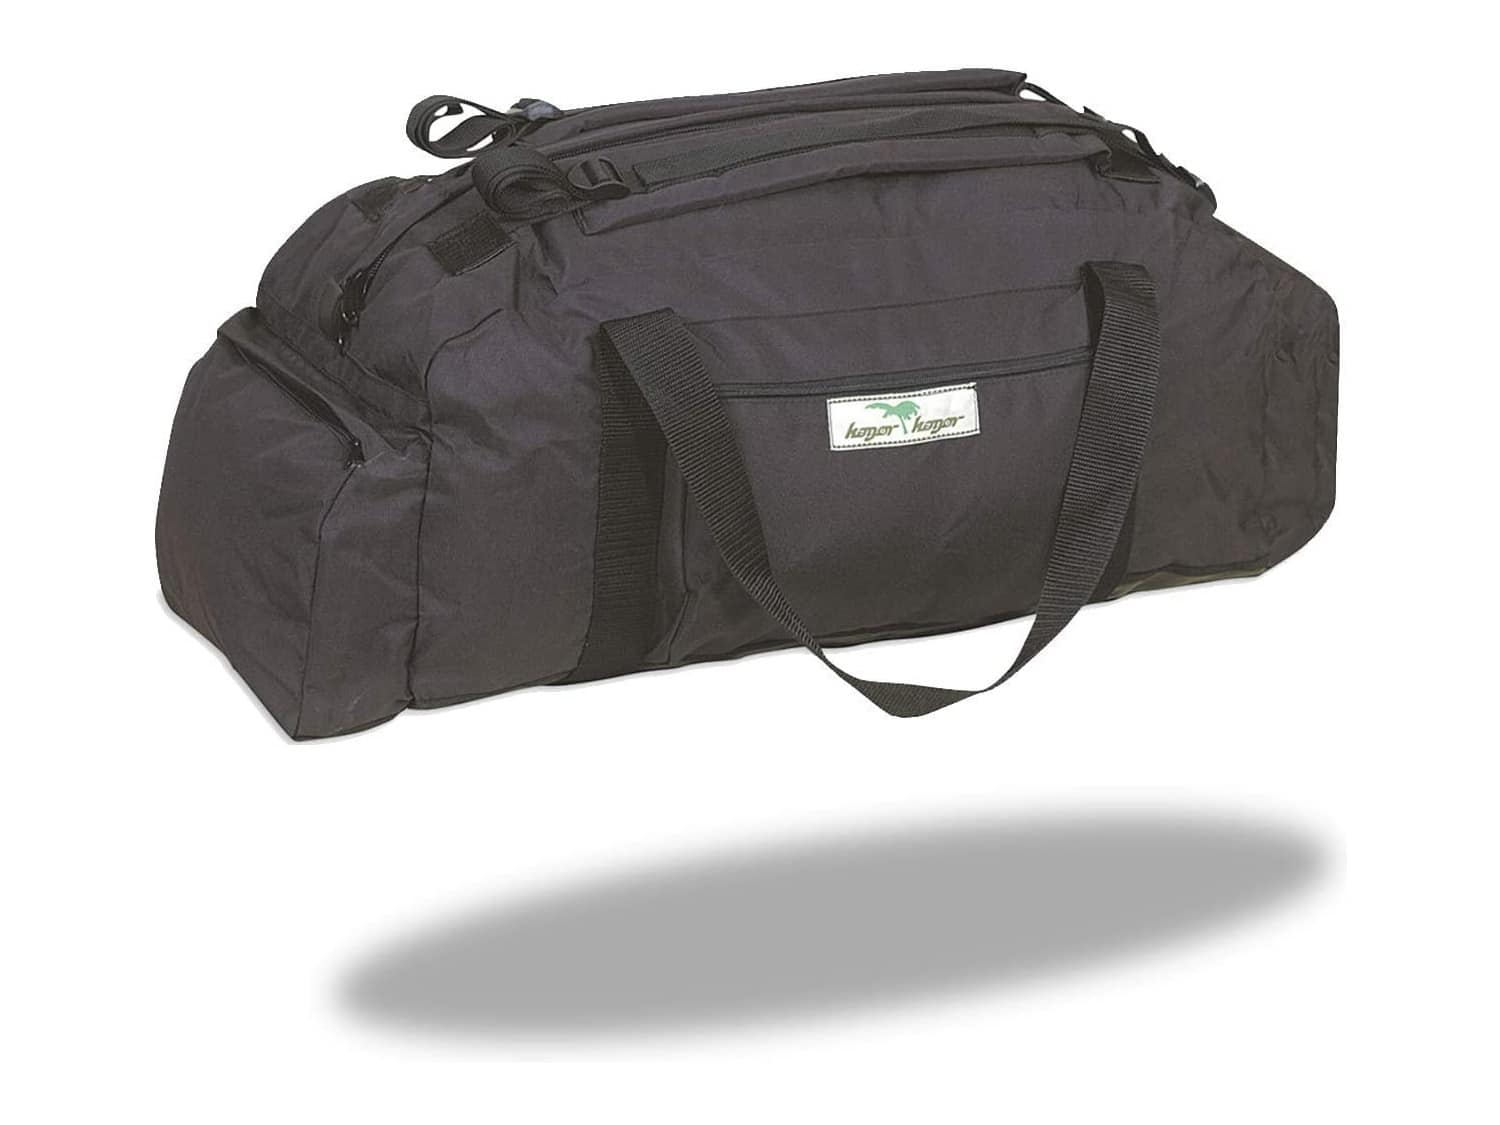 HAGOR Sayeret Duffle Bag Military & Army Cargo Style